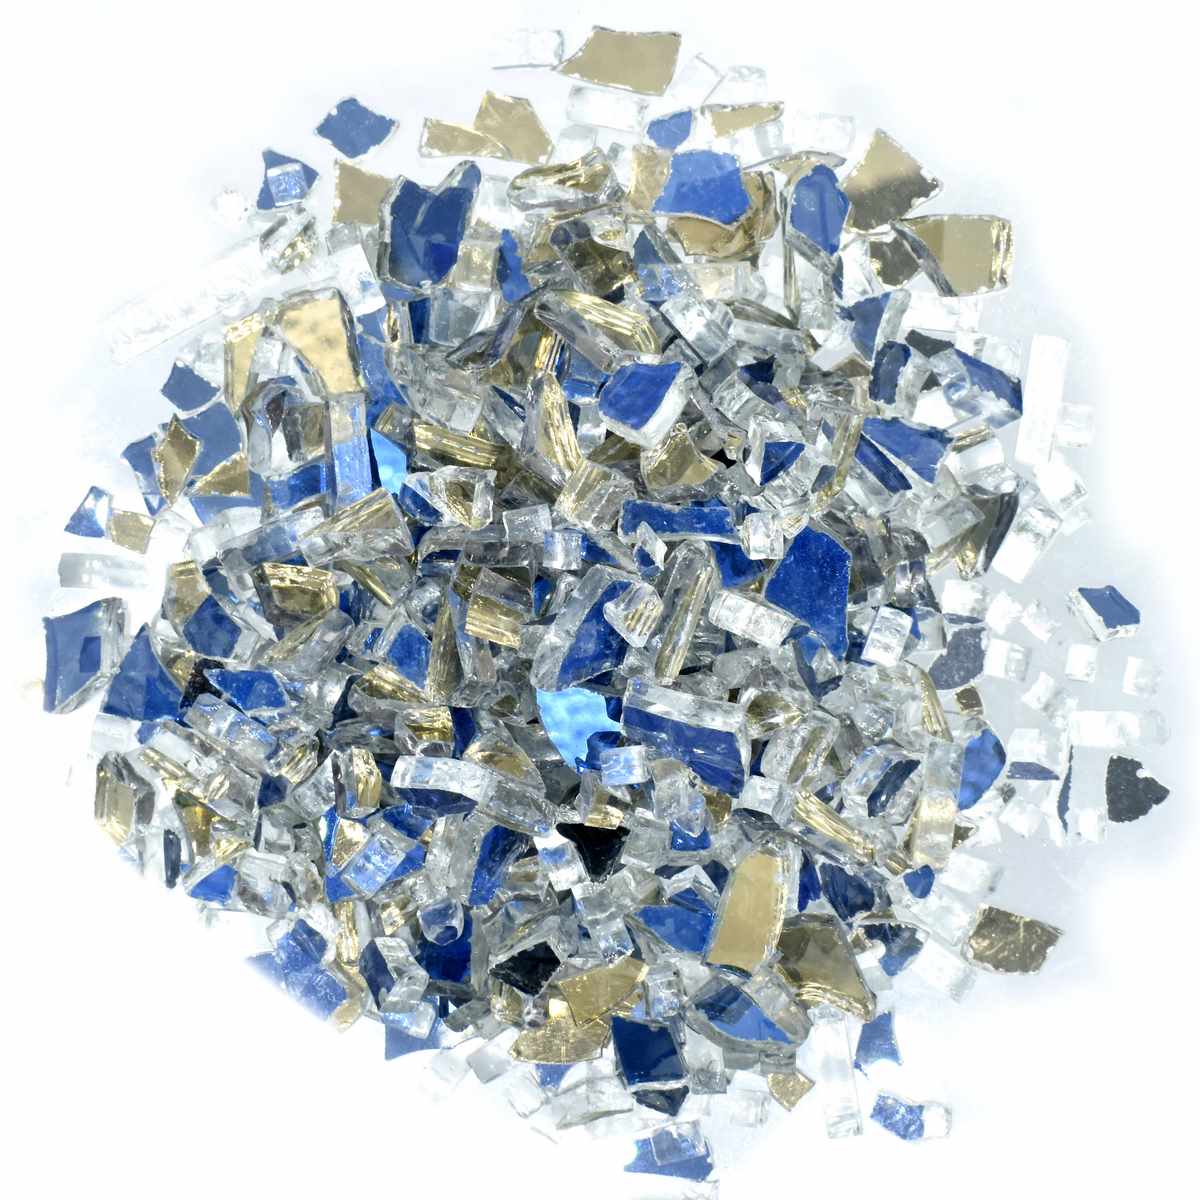 jags-mumbai Lippan Crushed Mirror Glass for resin & lippan art 200 grams  - Size 5-10 mm - Sapphire Blue Gold